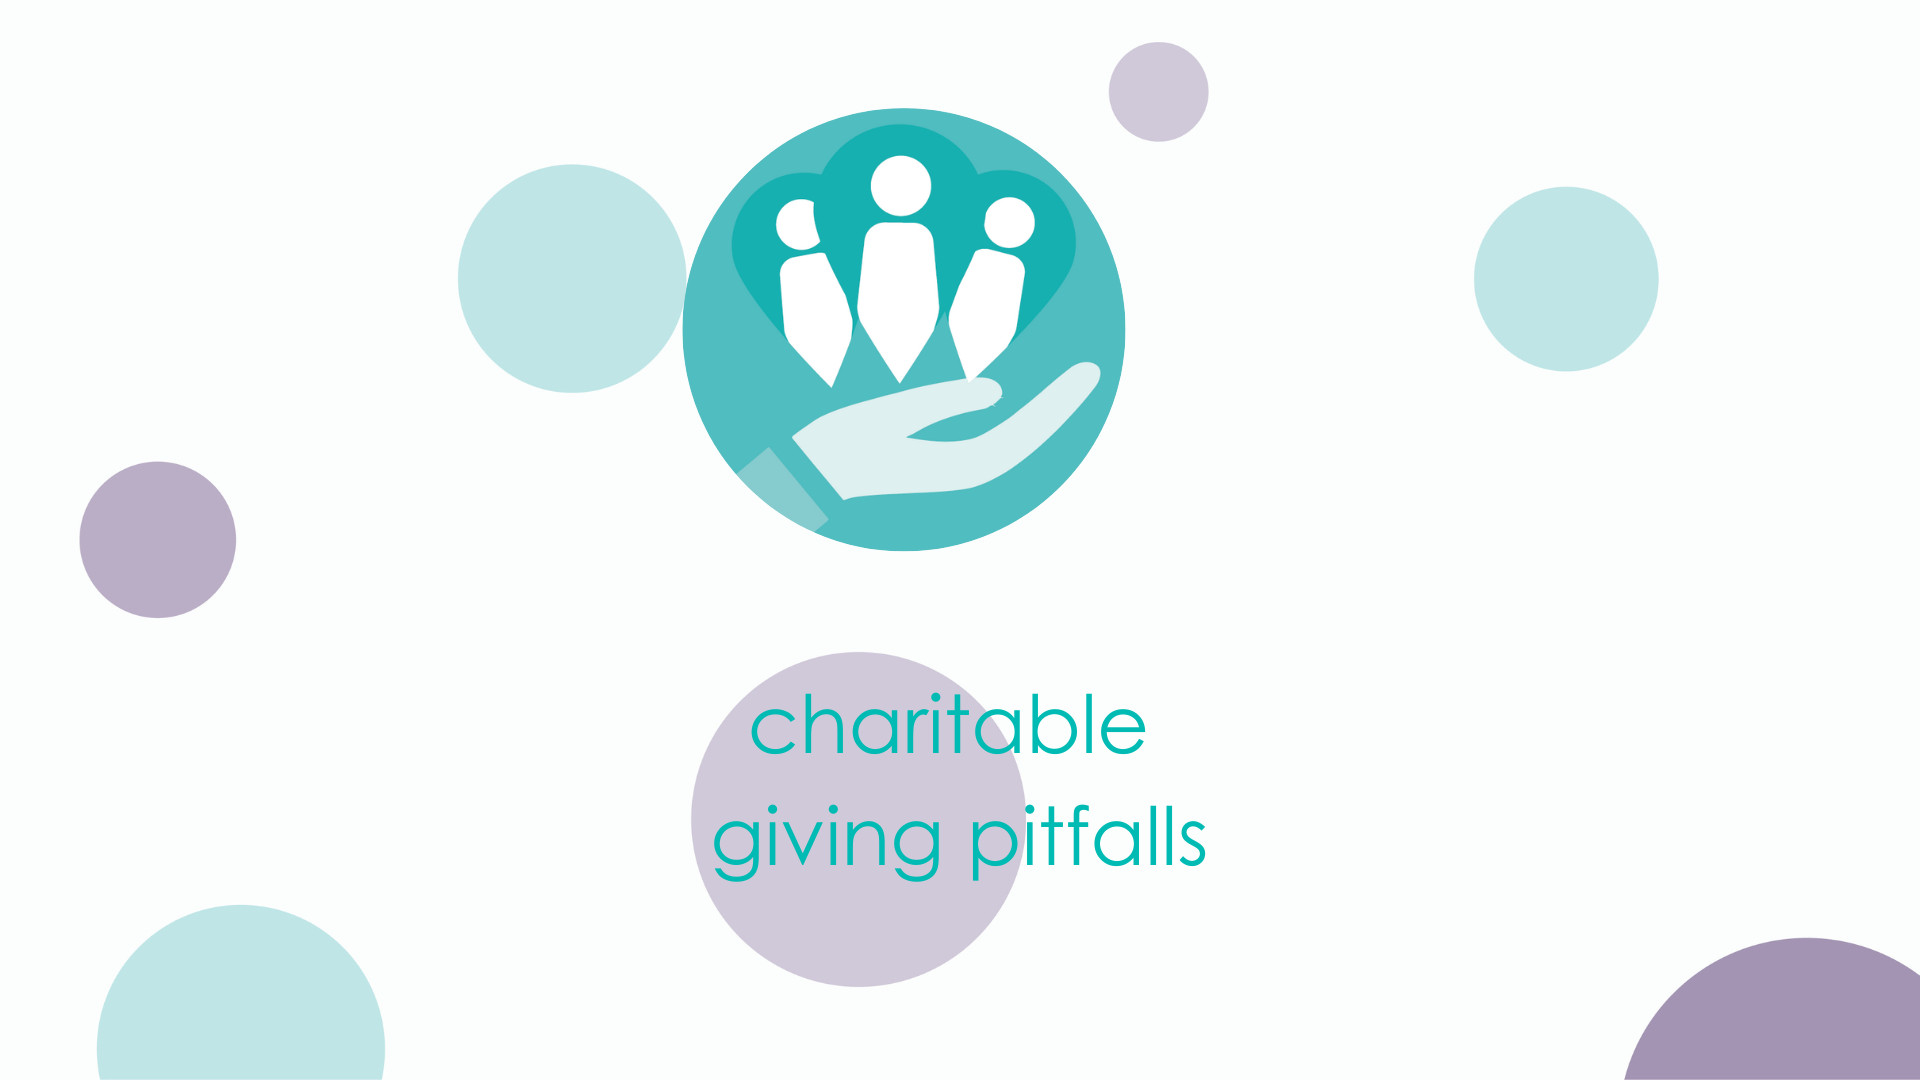 Charitable giving pitfalls